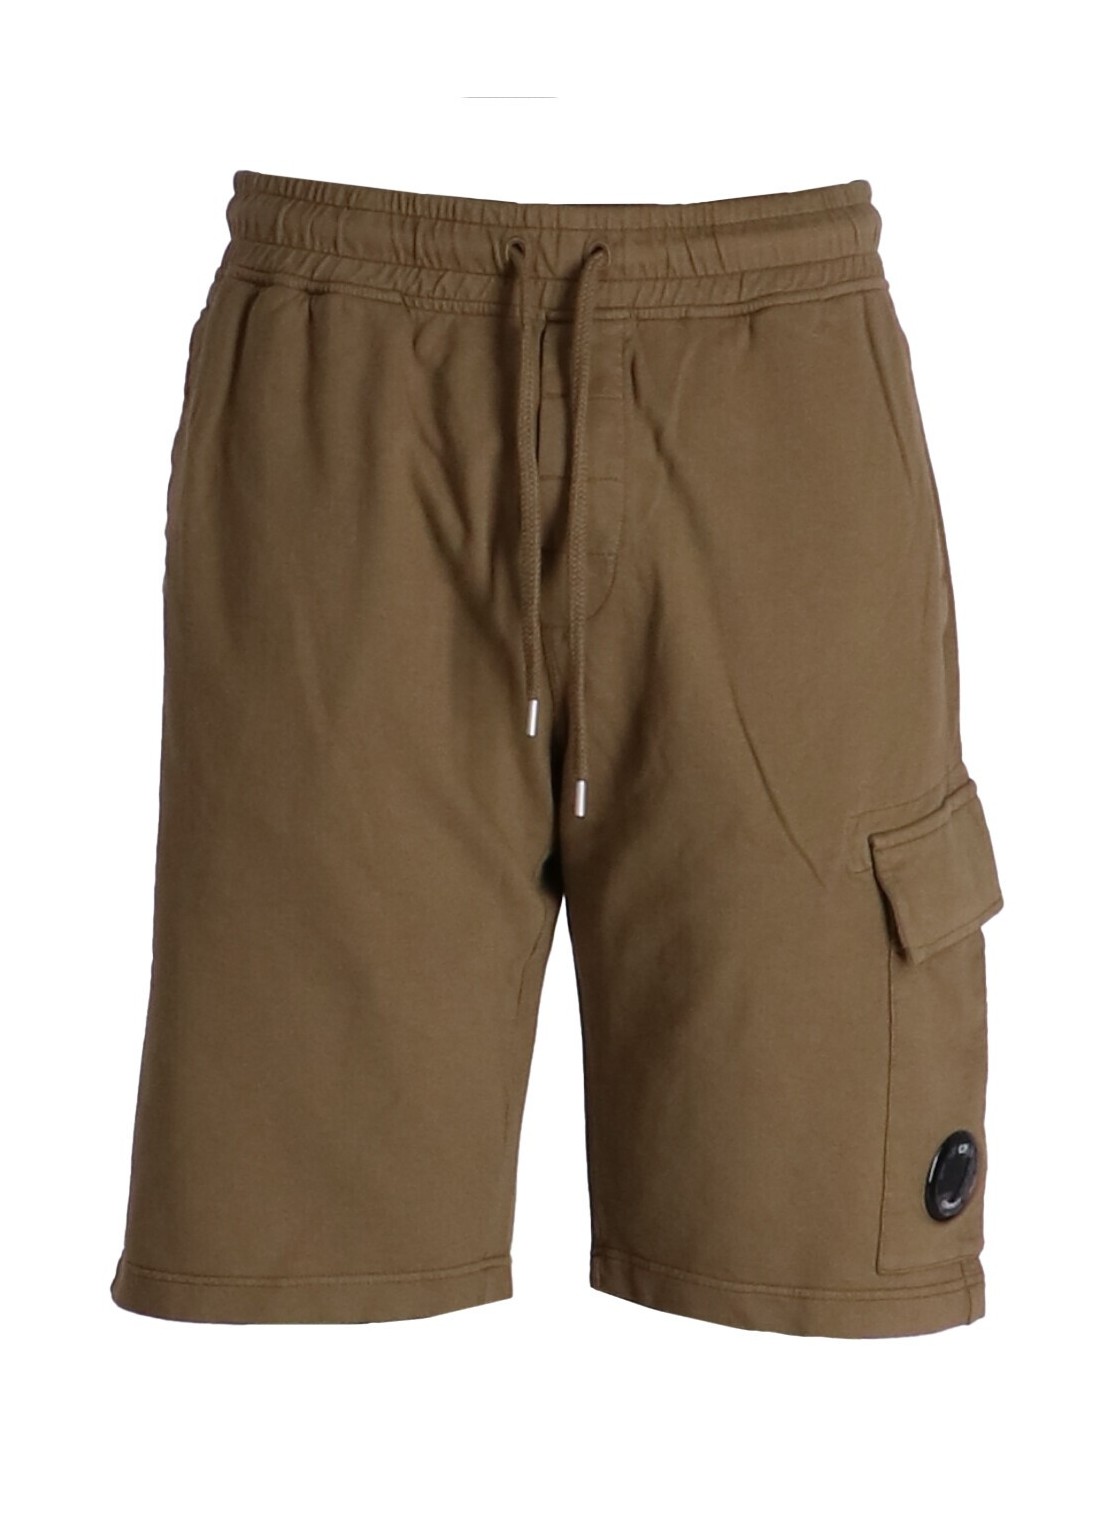 Pantalon corto c.p.company short pant man light fleece cargo shorts 15cmsb021a002246g 653 talla XL
 